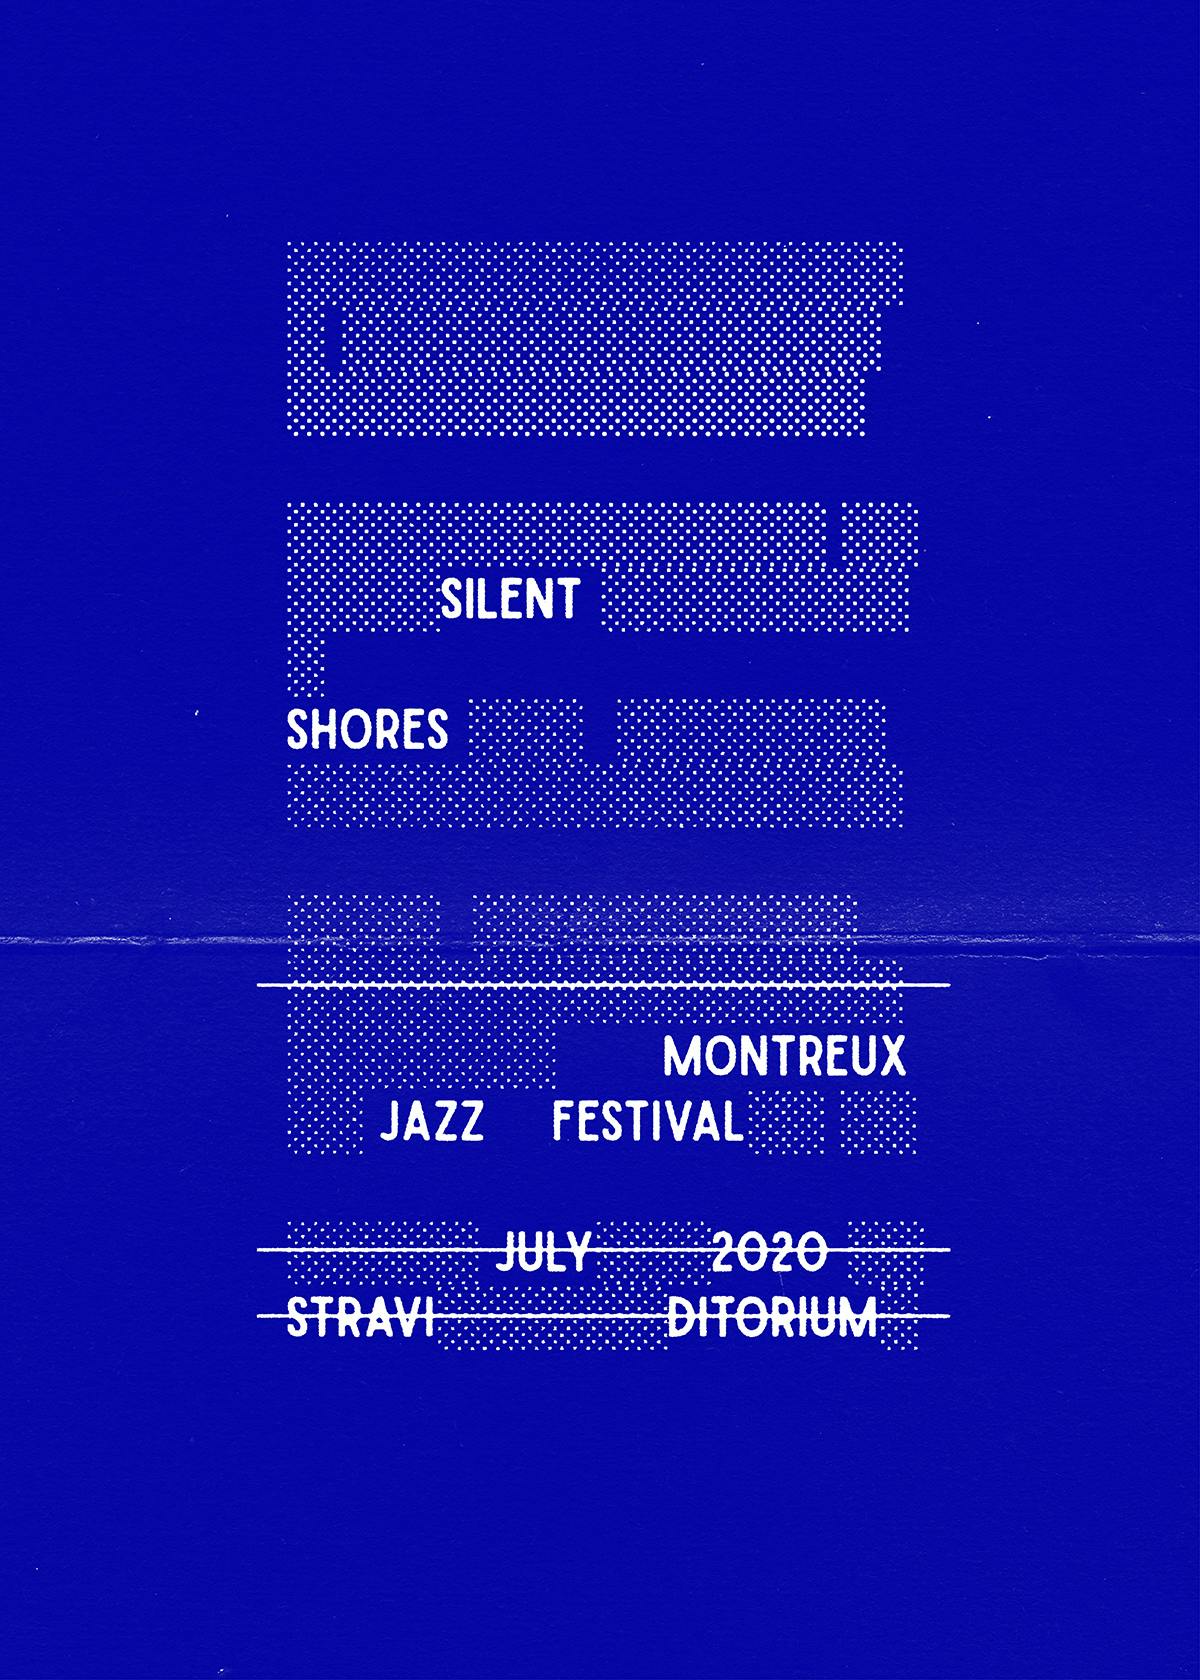 Montreux Jazz Festival poster